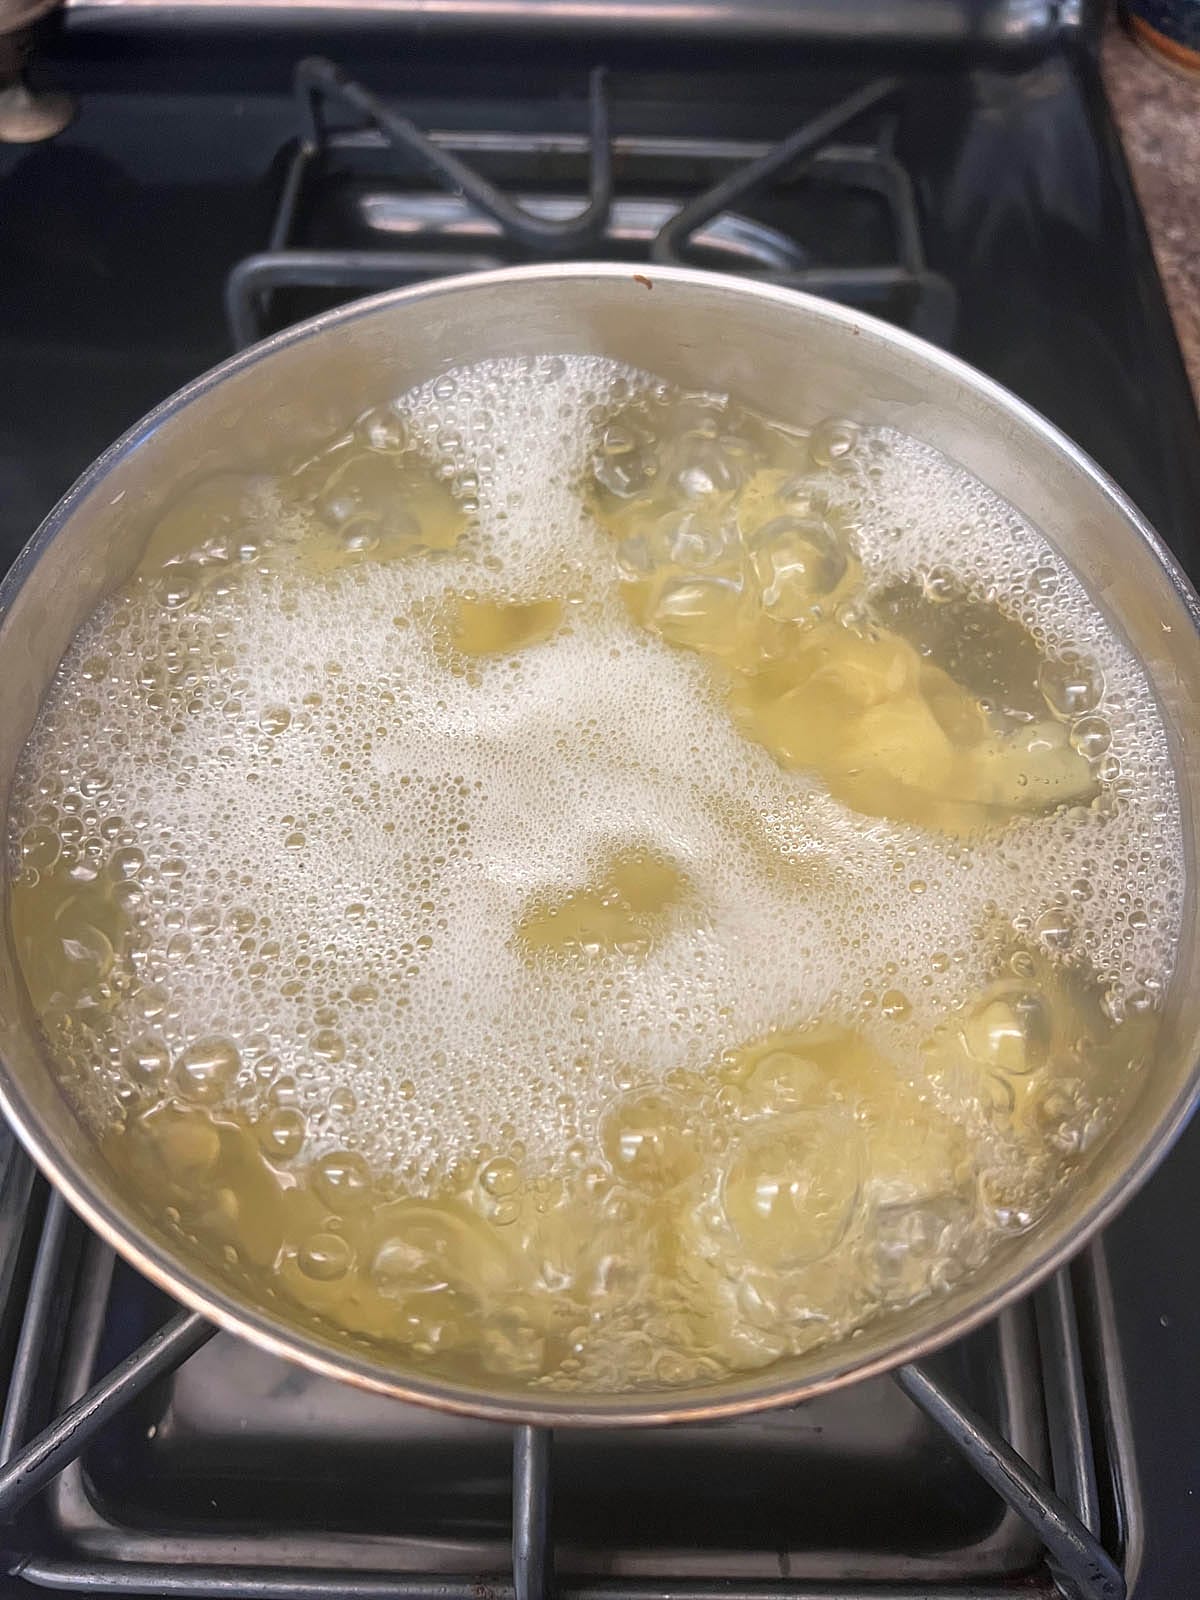 Potatoes in boiling water in a saucepan.